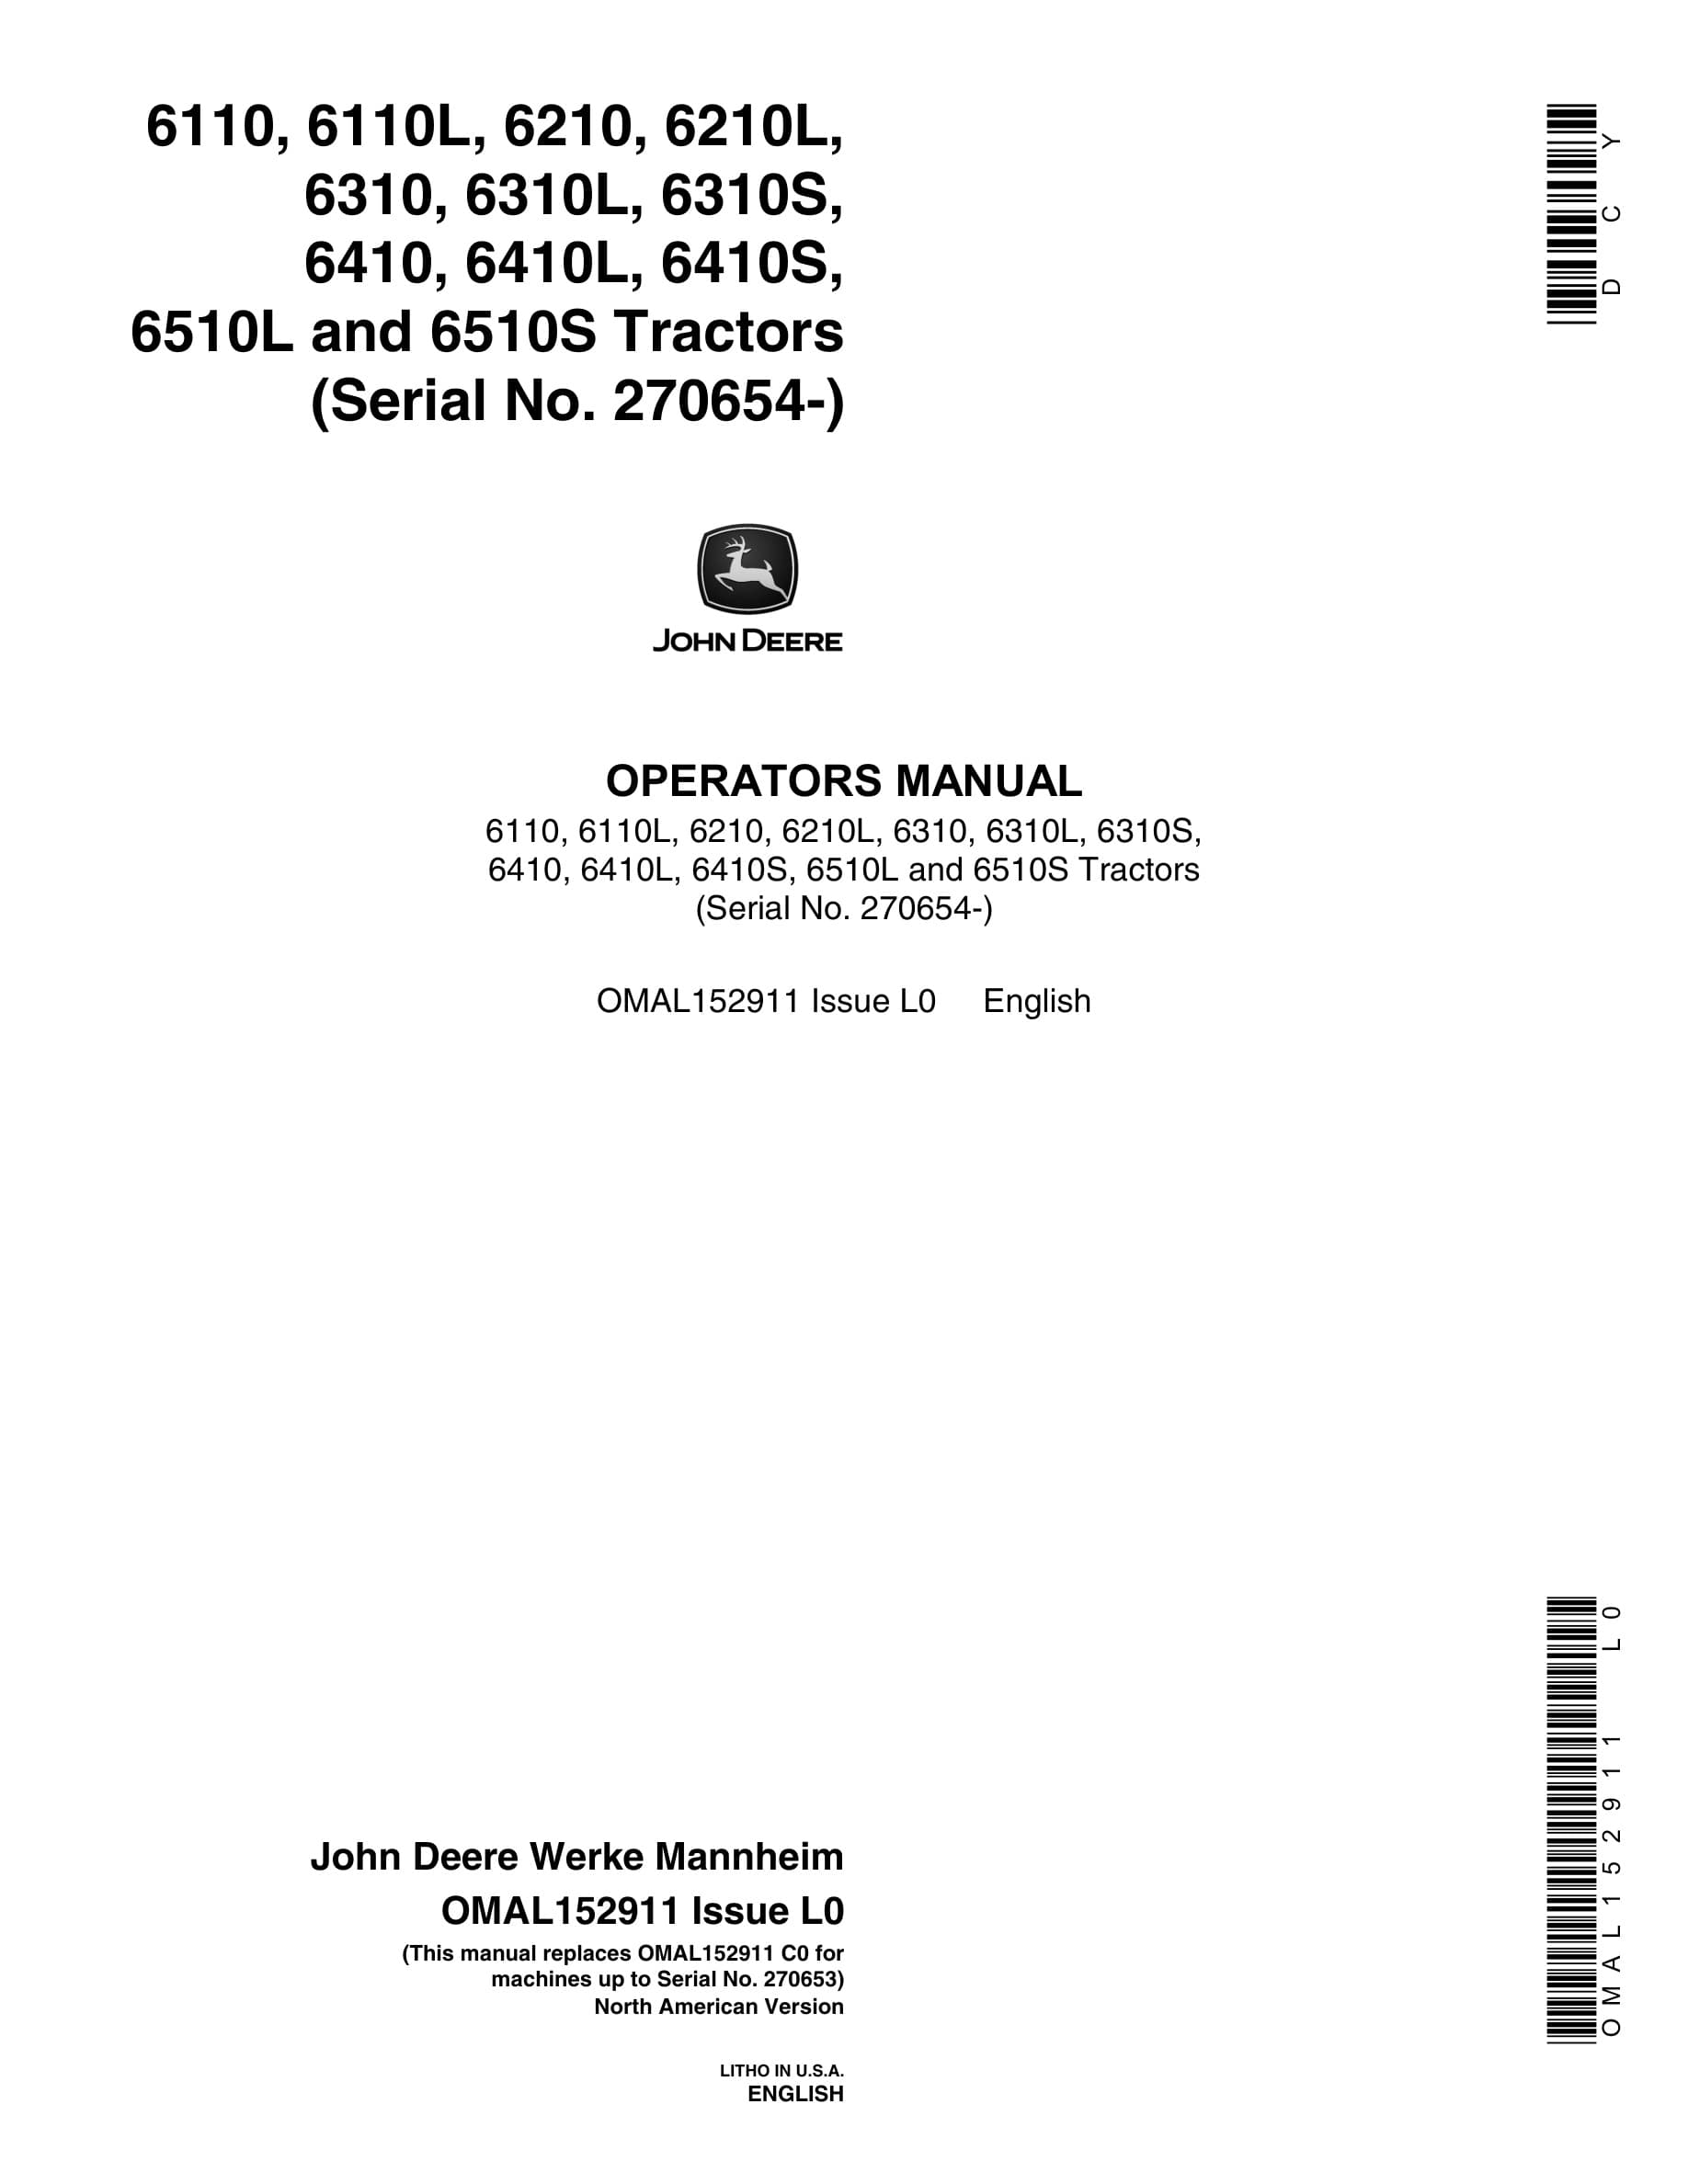 John Deere 6110, 6110L, 6210, 6210L, 6310, 6310L, 6310S,6410, 6410L, 6410S, 6510L and 6510S Tractor Operator Manual OMAL152911-1